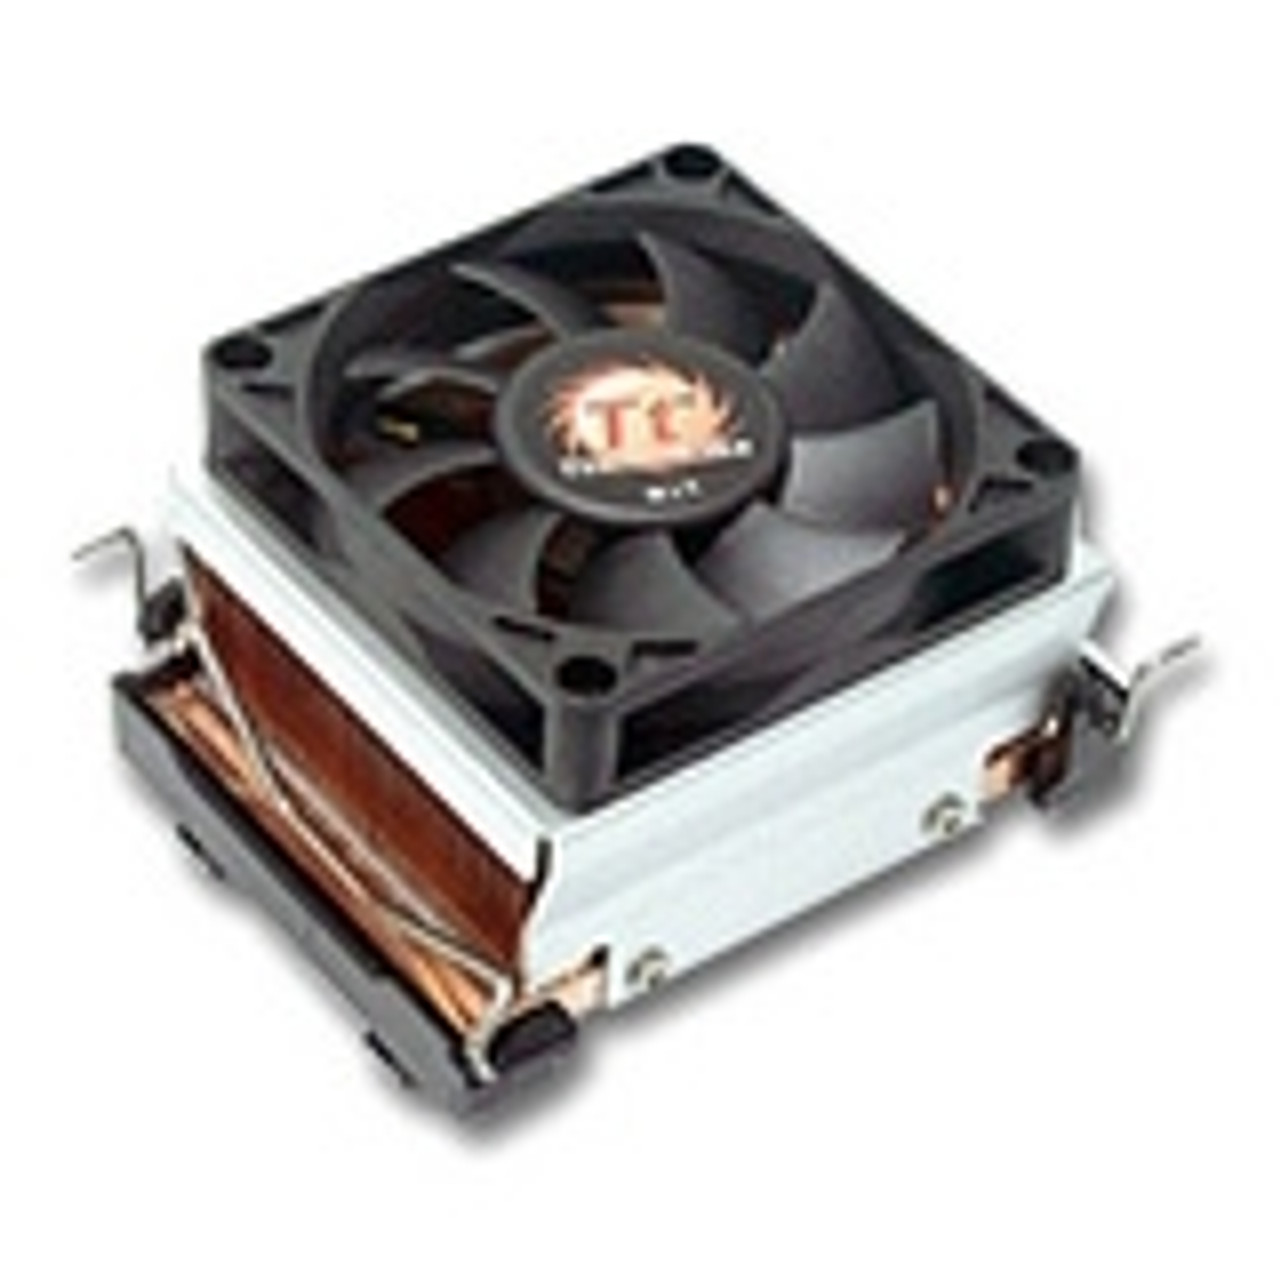 A1608 Thermaltake Intel Xeon 2U Active Solution